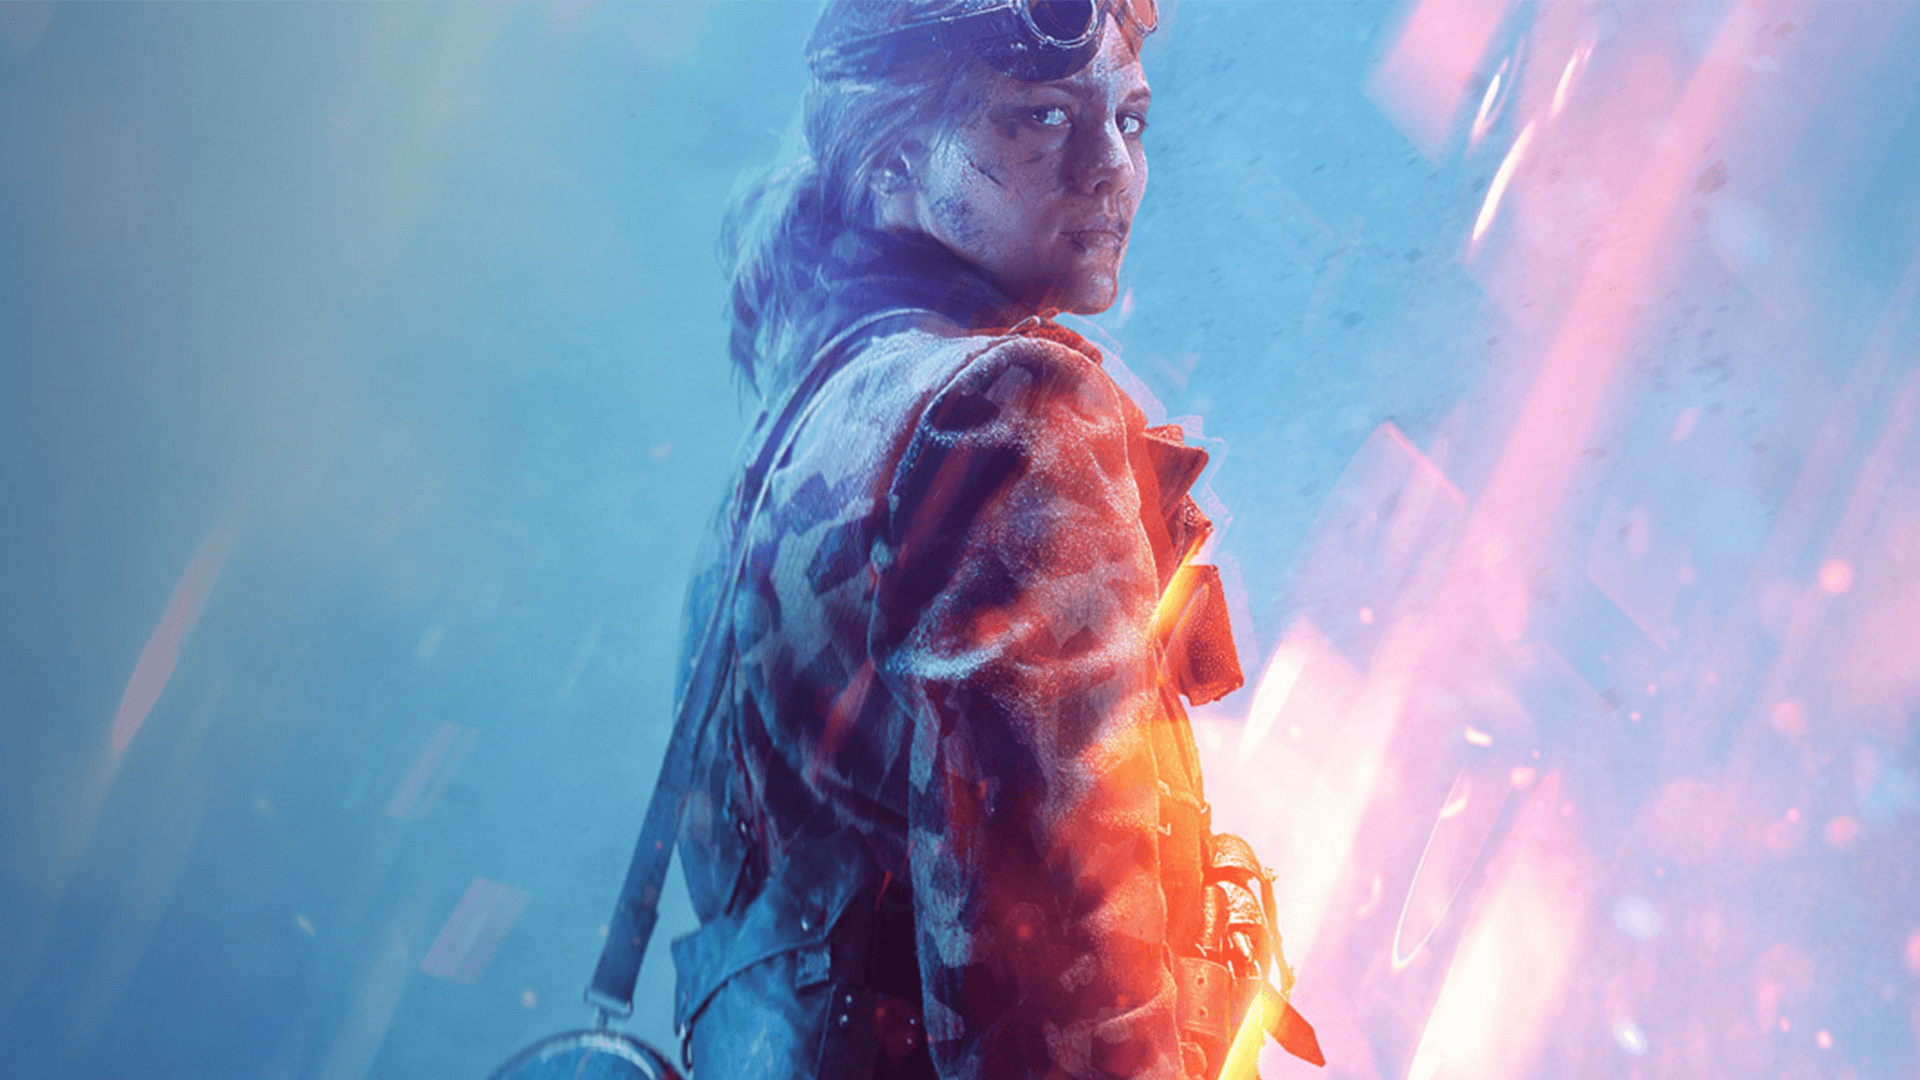 Battlefield V Wallpaper HD. Wallpaper 4k in 2019